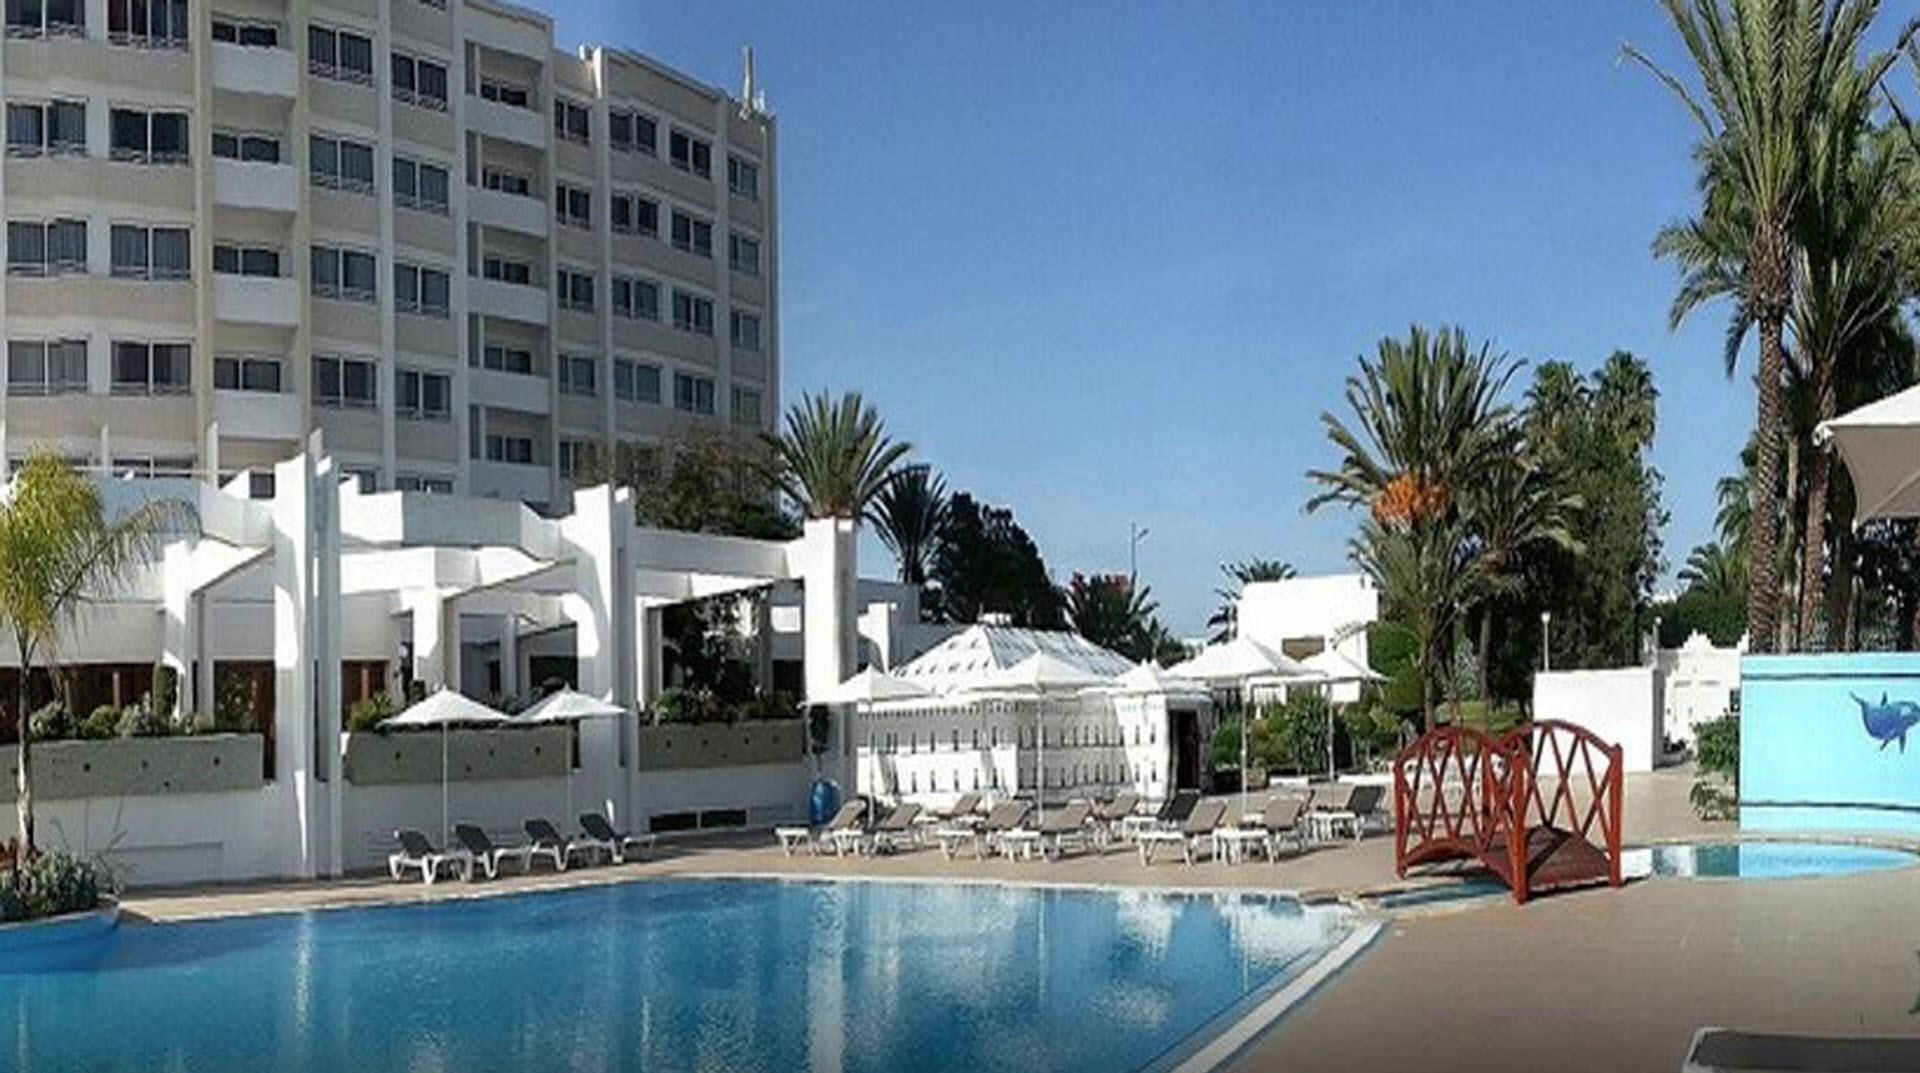 Sahara Hotel in Agadir, MA